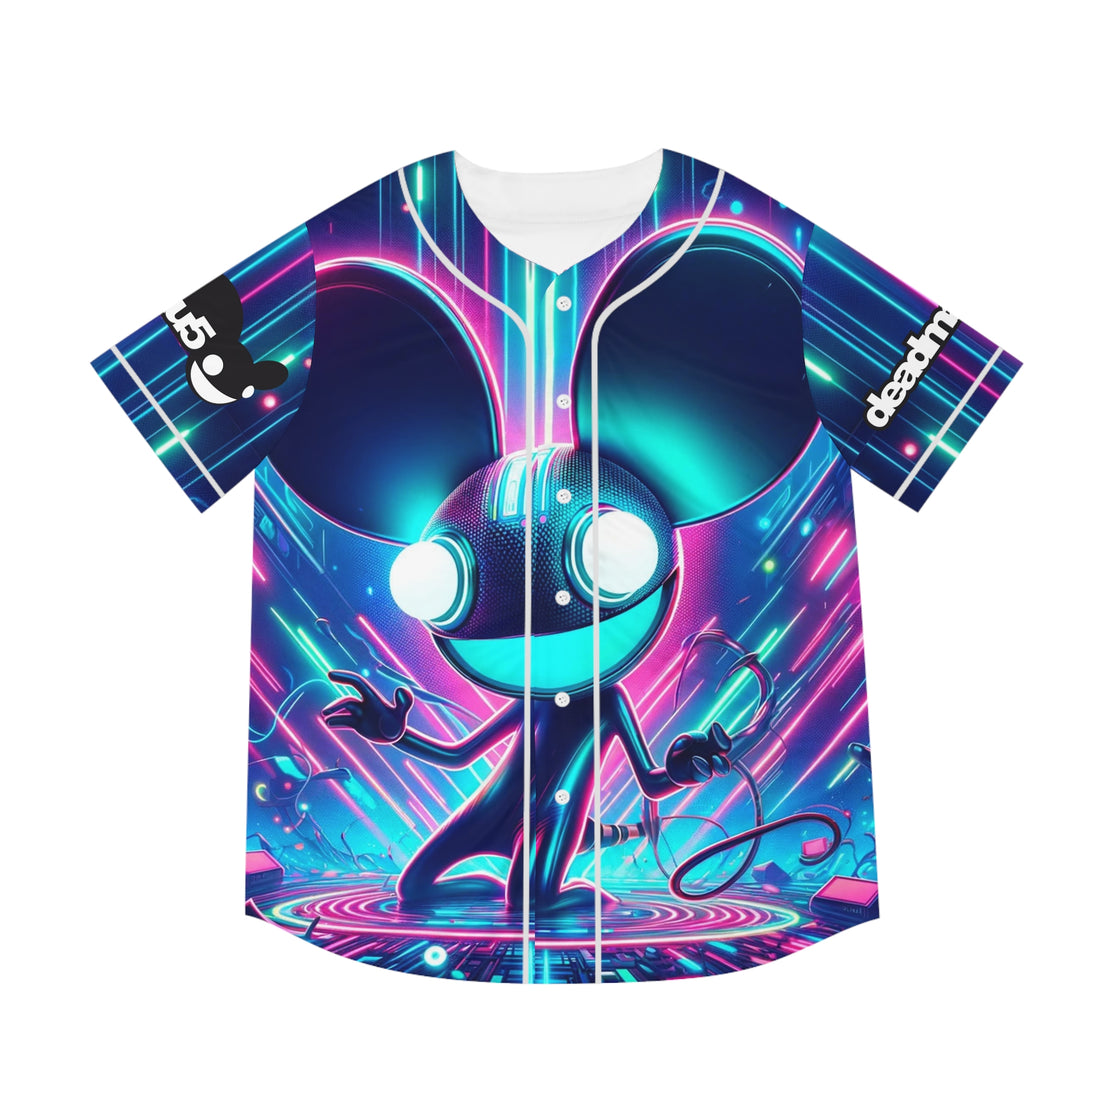 Deadmau5 jersey (Neon Colors) Edm Jersey